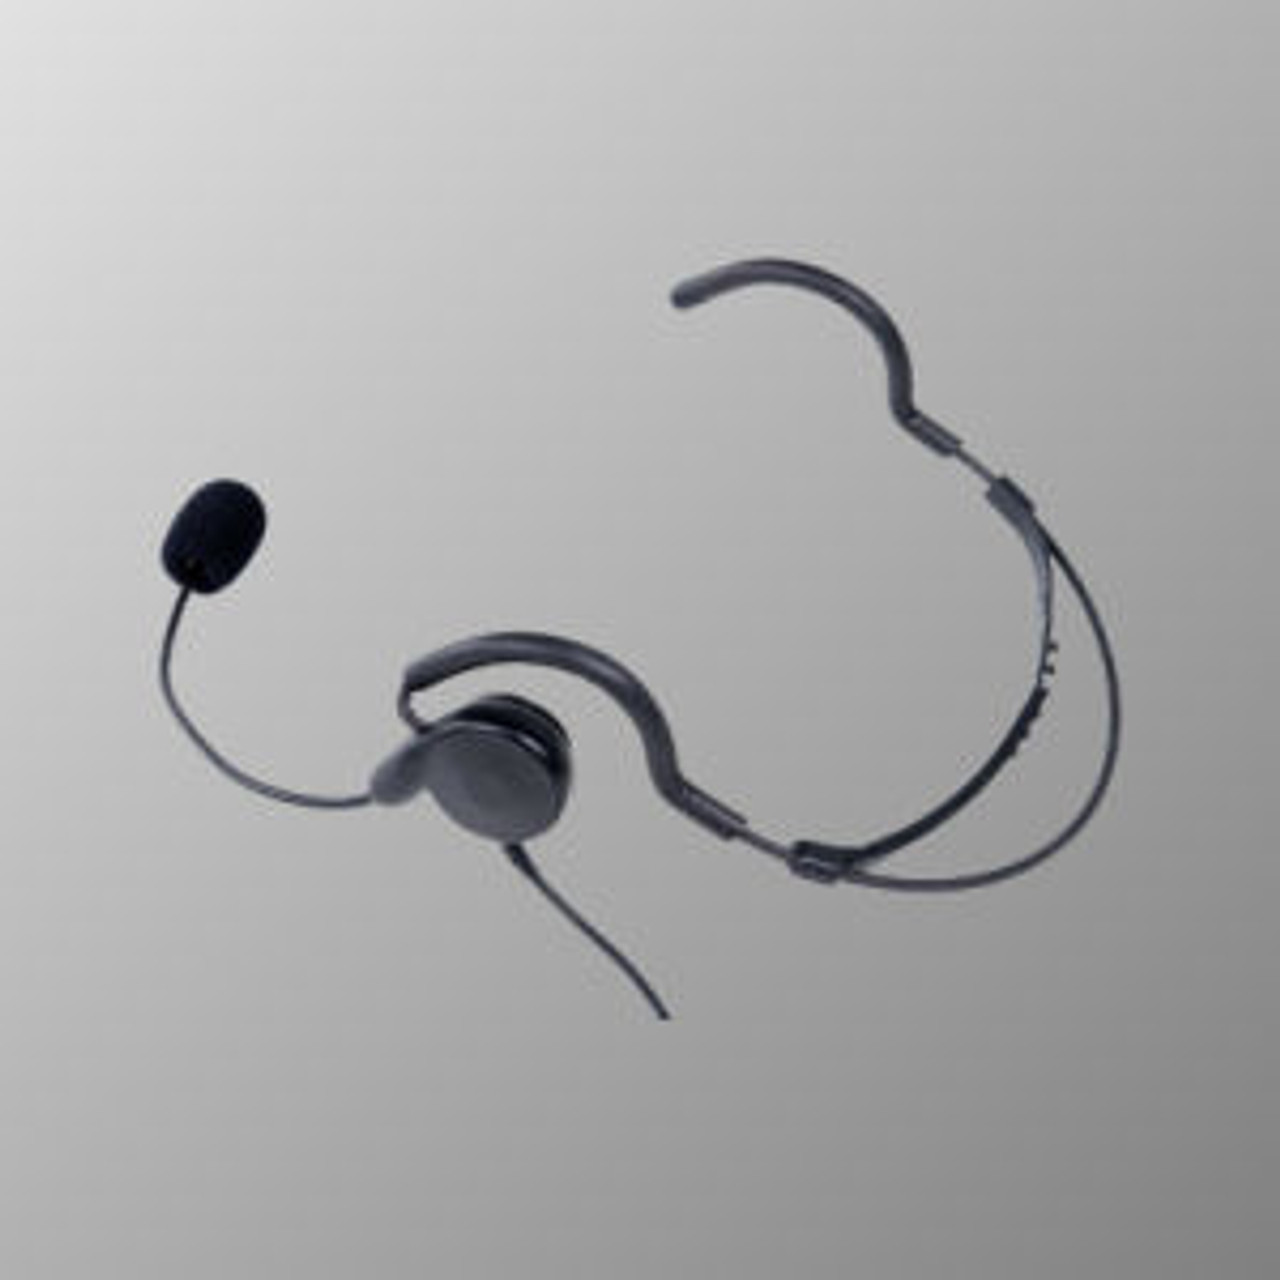 Motorola CP200 Behind The Head Single Muff Noise Canceling Headset